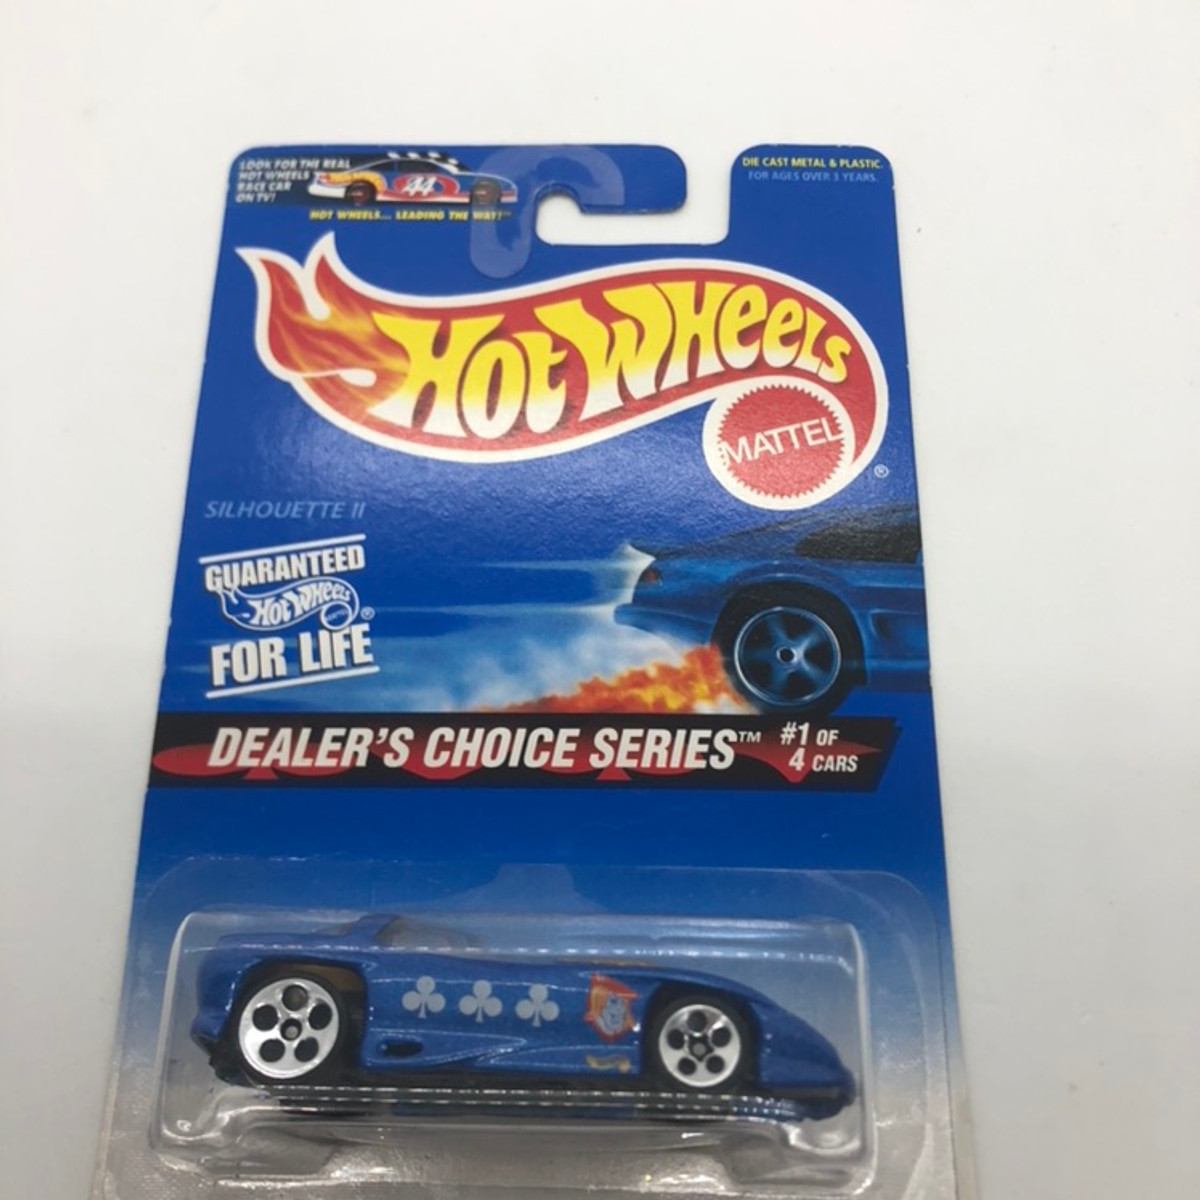 1997 Hot wheels Dealer’s Choice Series Silhouette II 